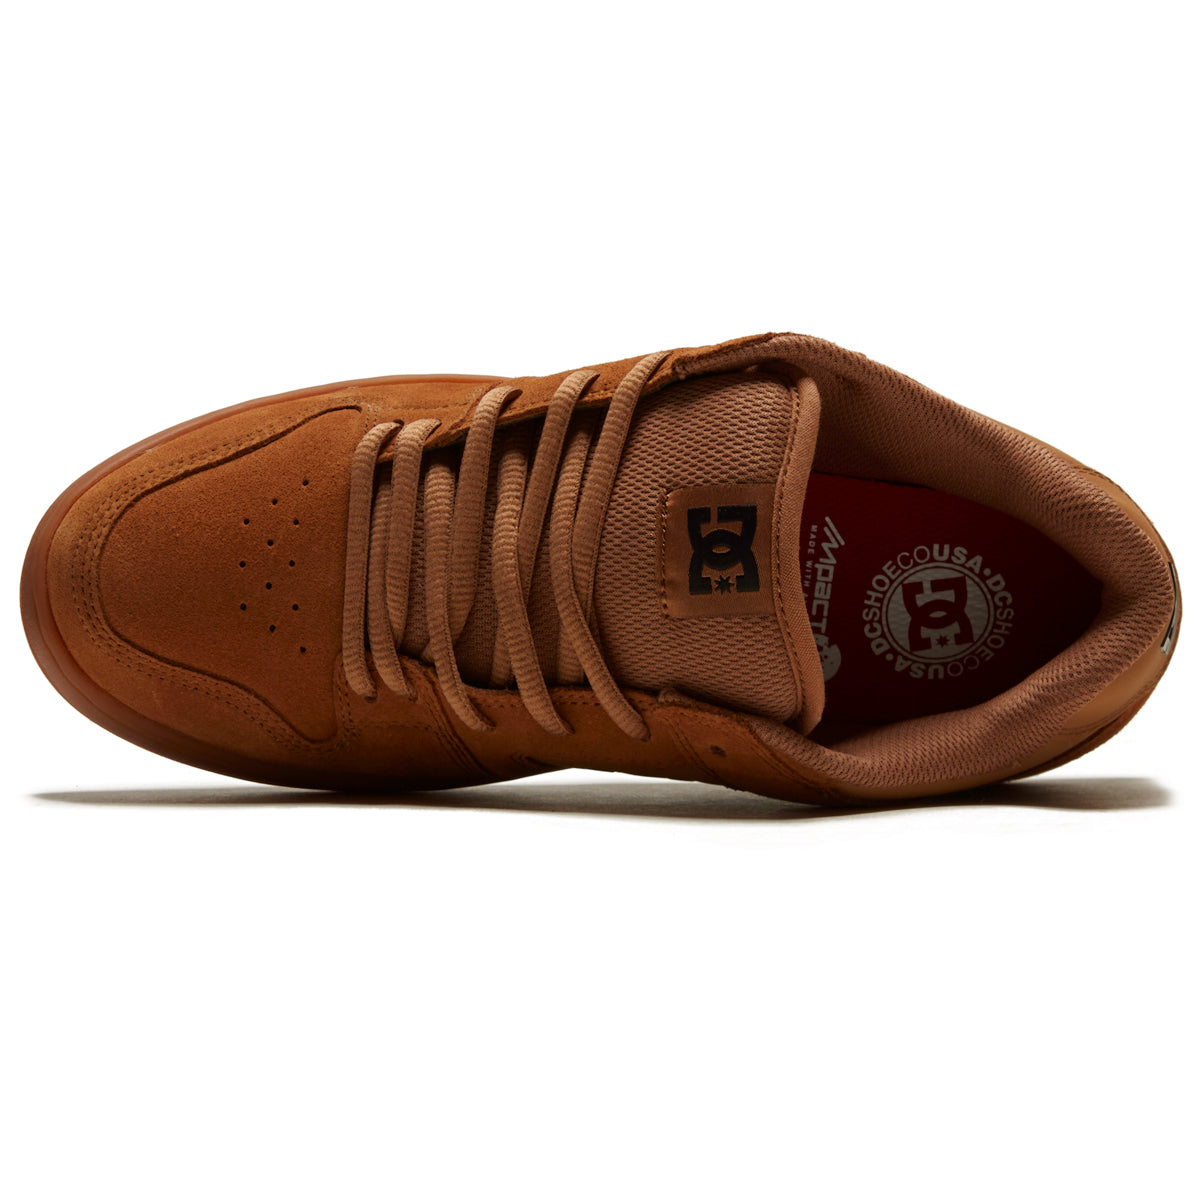 DC Manteca 4 S Shoes - Brown/Tan image 3